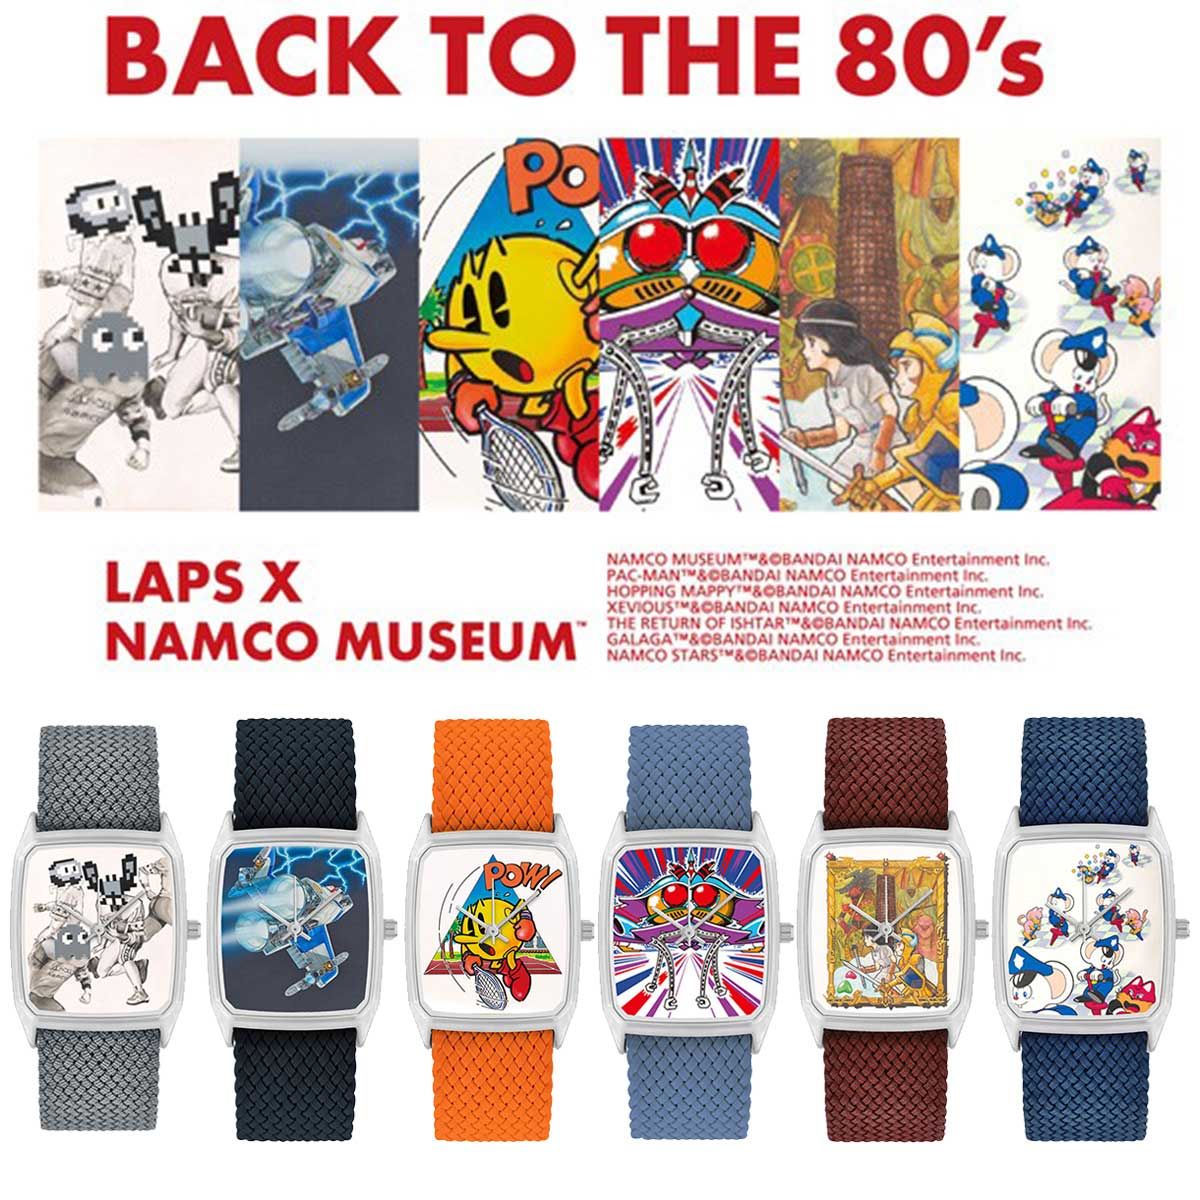 Xevious Wristwatch—Namco Museum/LAPS Collaboration